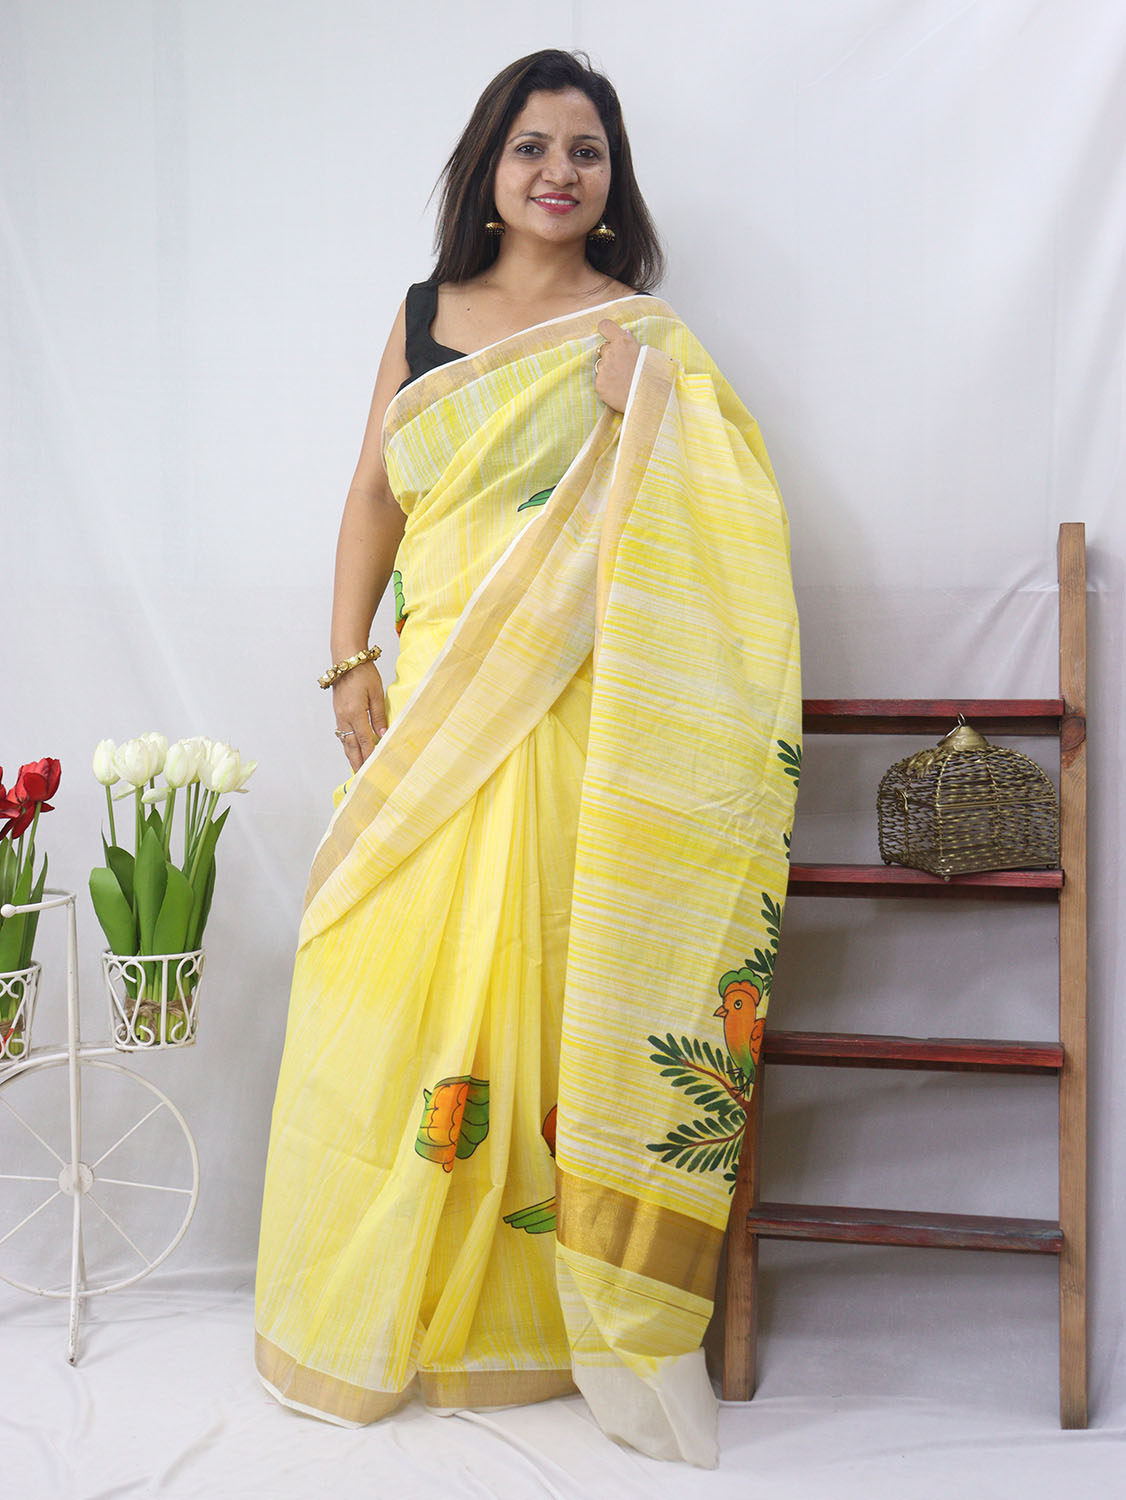 Hand-painted Kerala cotton saree - Vibrant yellow, pure elegance